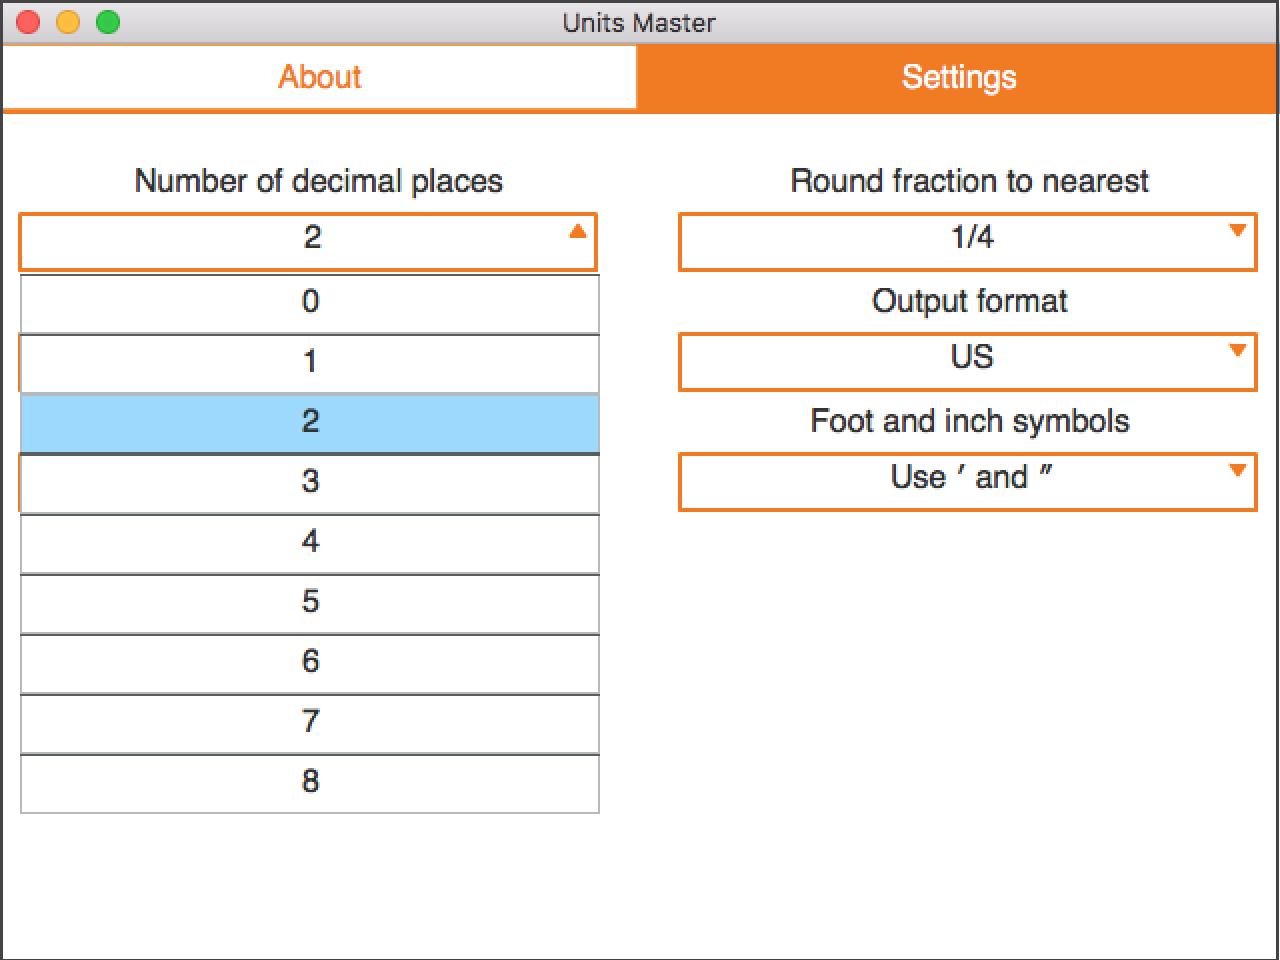 Rounding settings for decimals